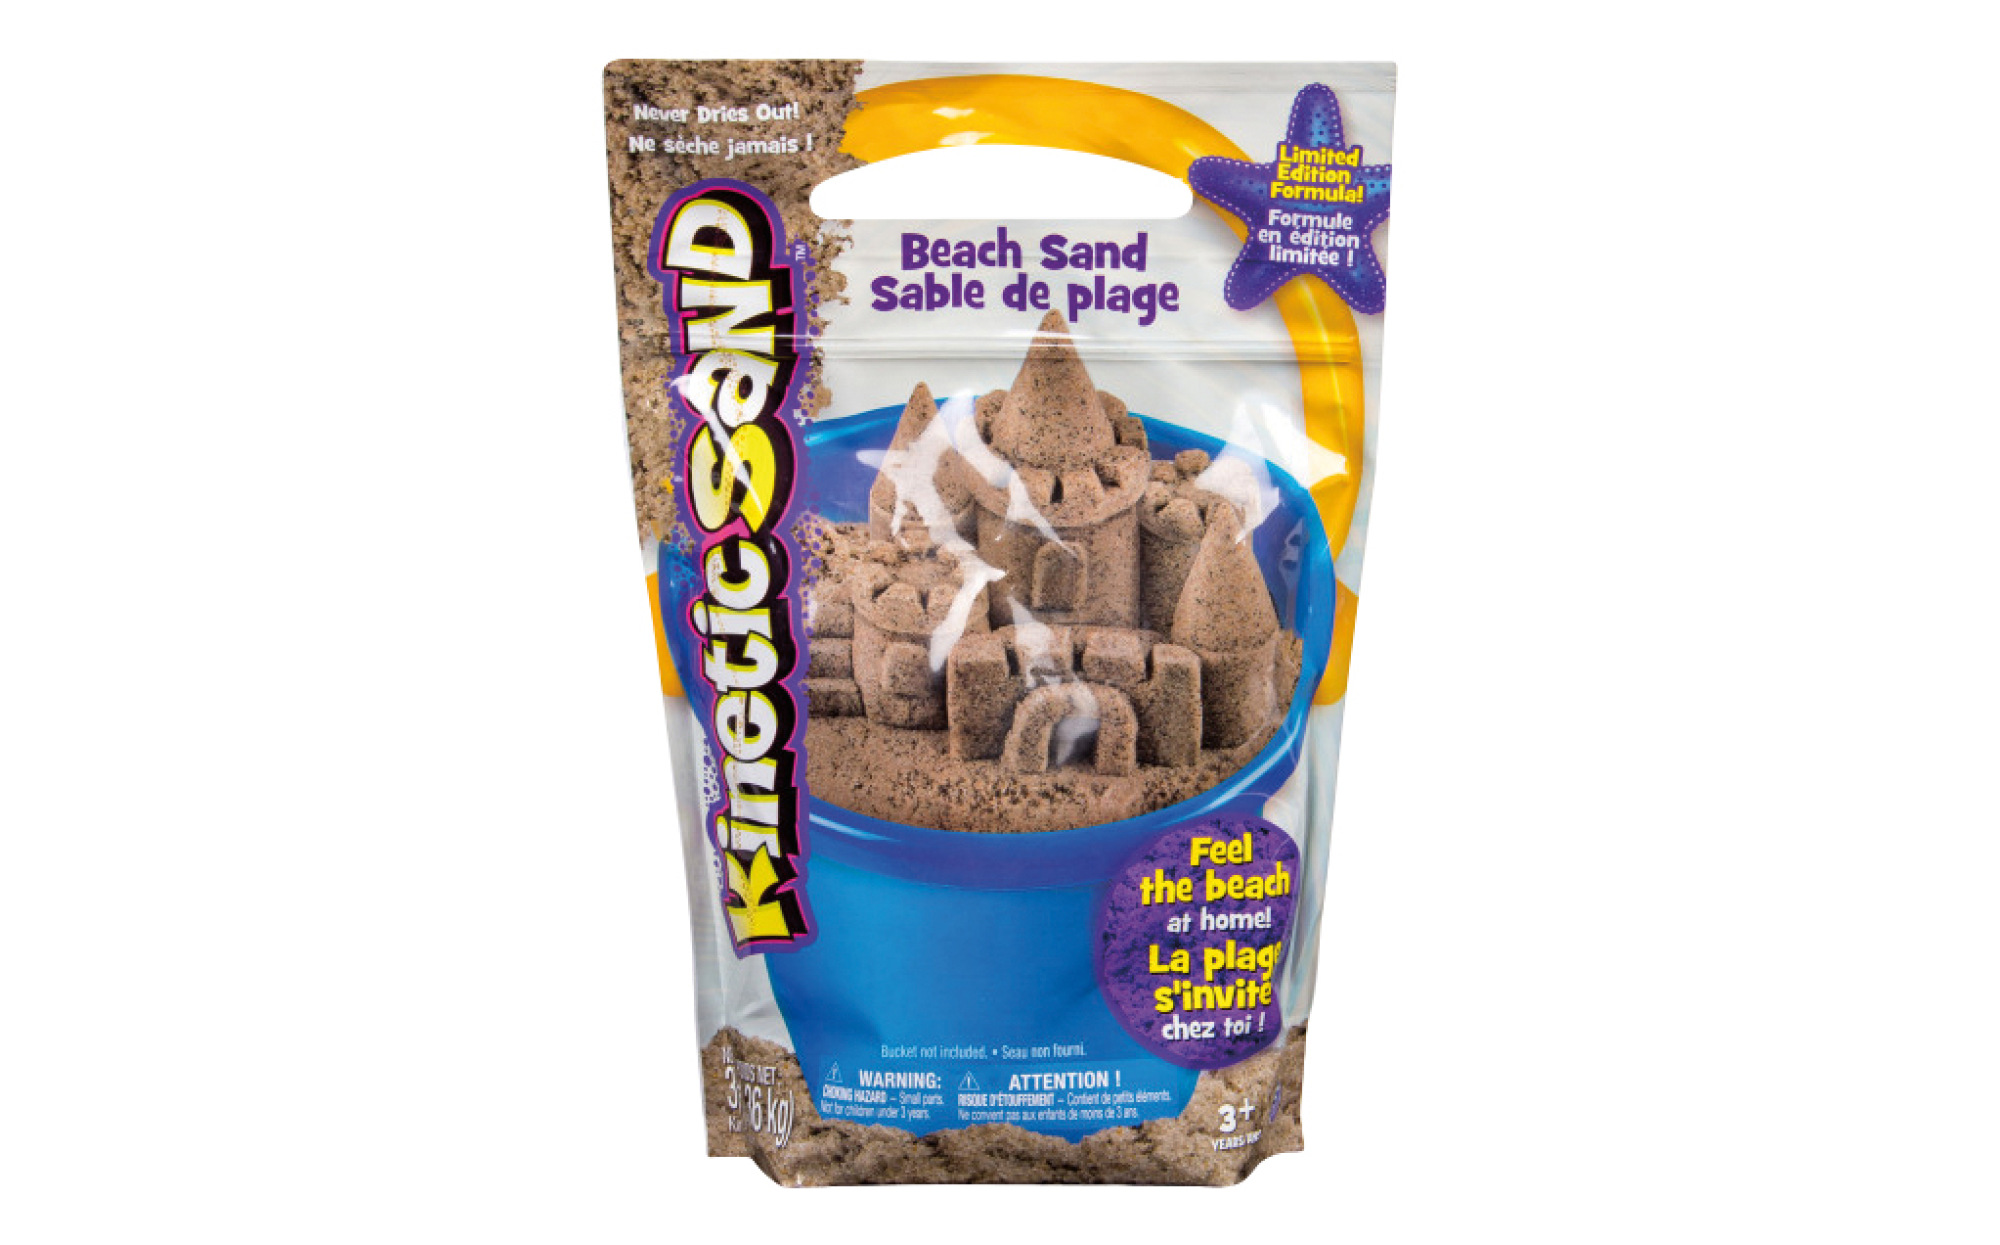 Kinetic Sand Beach Sand 3lbs | Mess-Free Sensory Play for Kids 3+